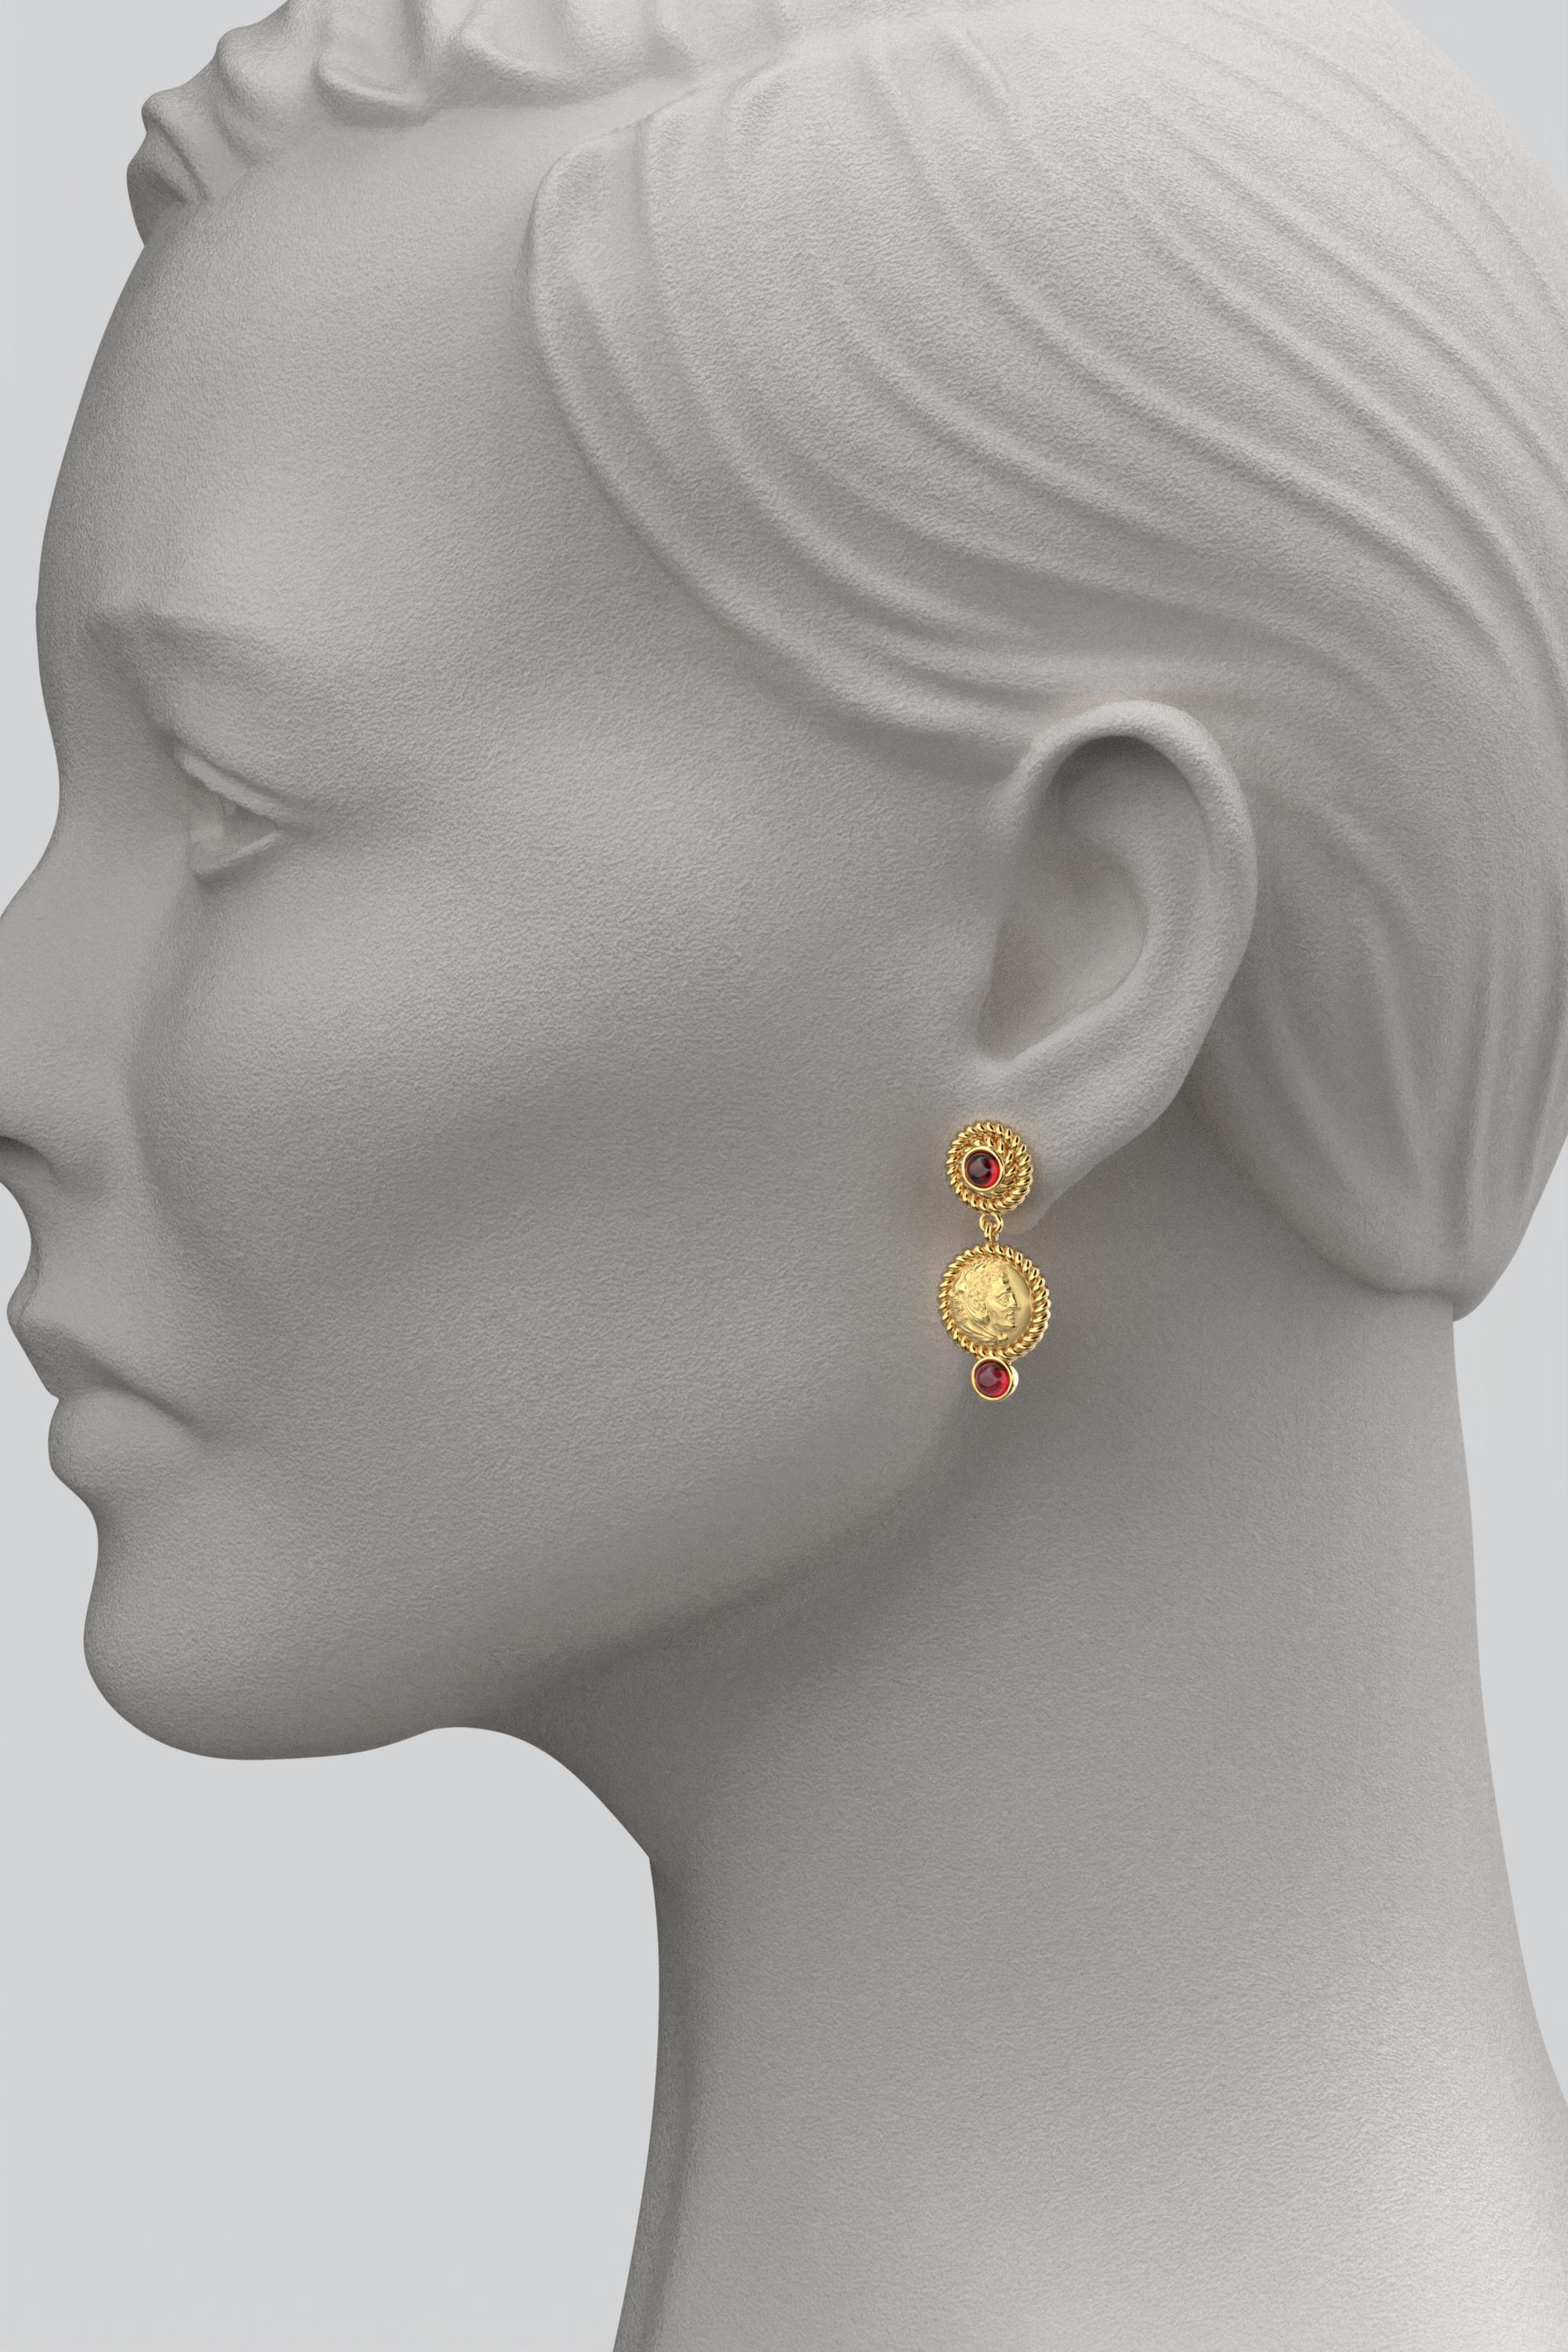 Greek Revival 18k Gold Dangle Earrings in Ancient Greek Style | Italian Jewelry made in Italy For Sale